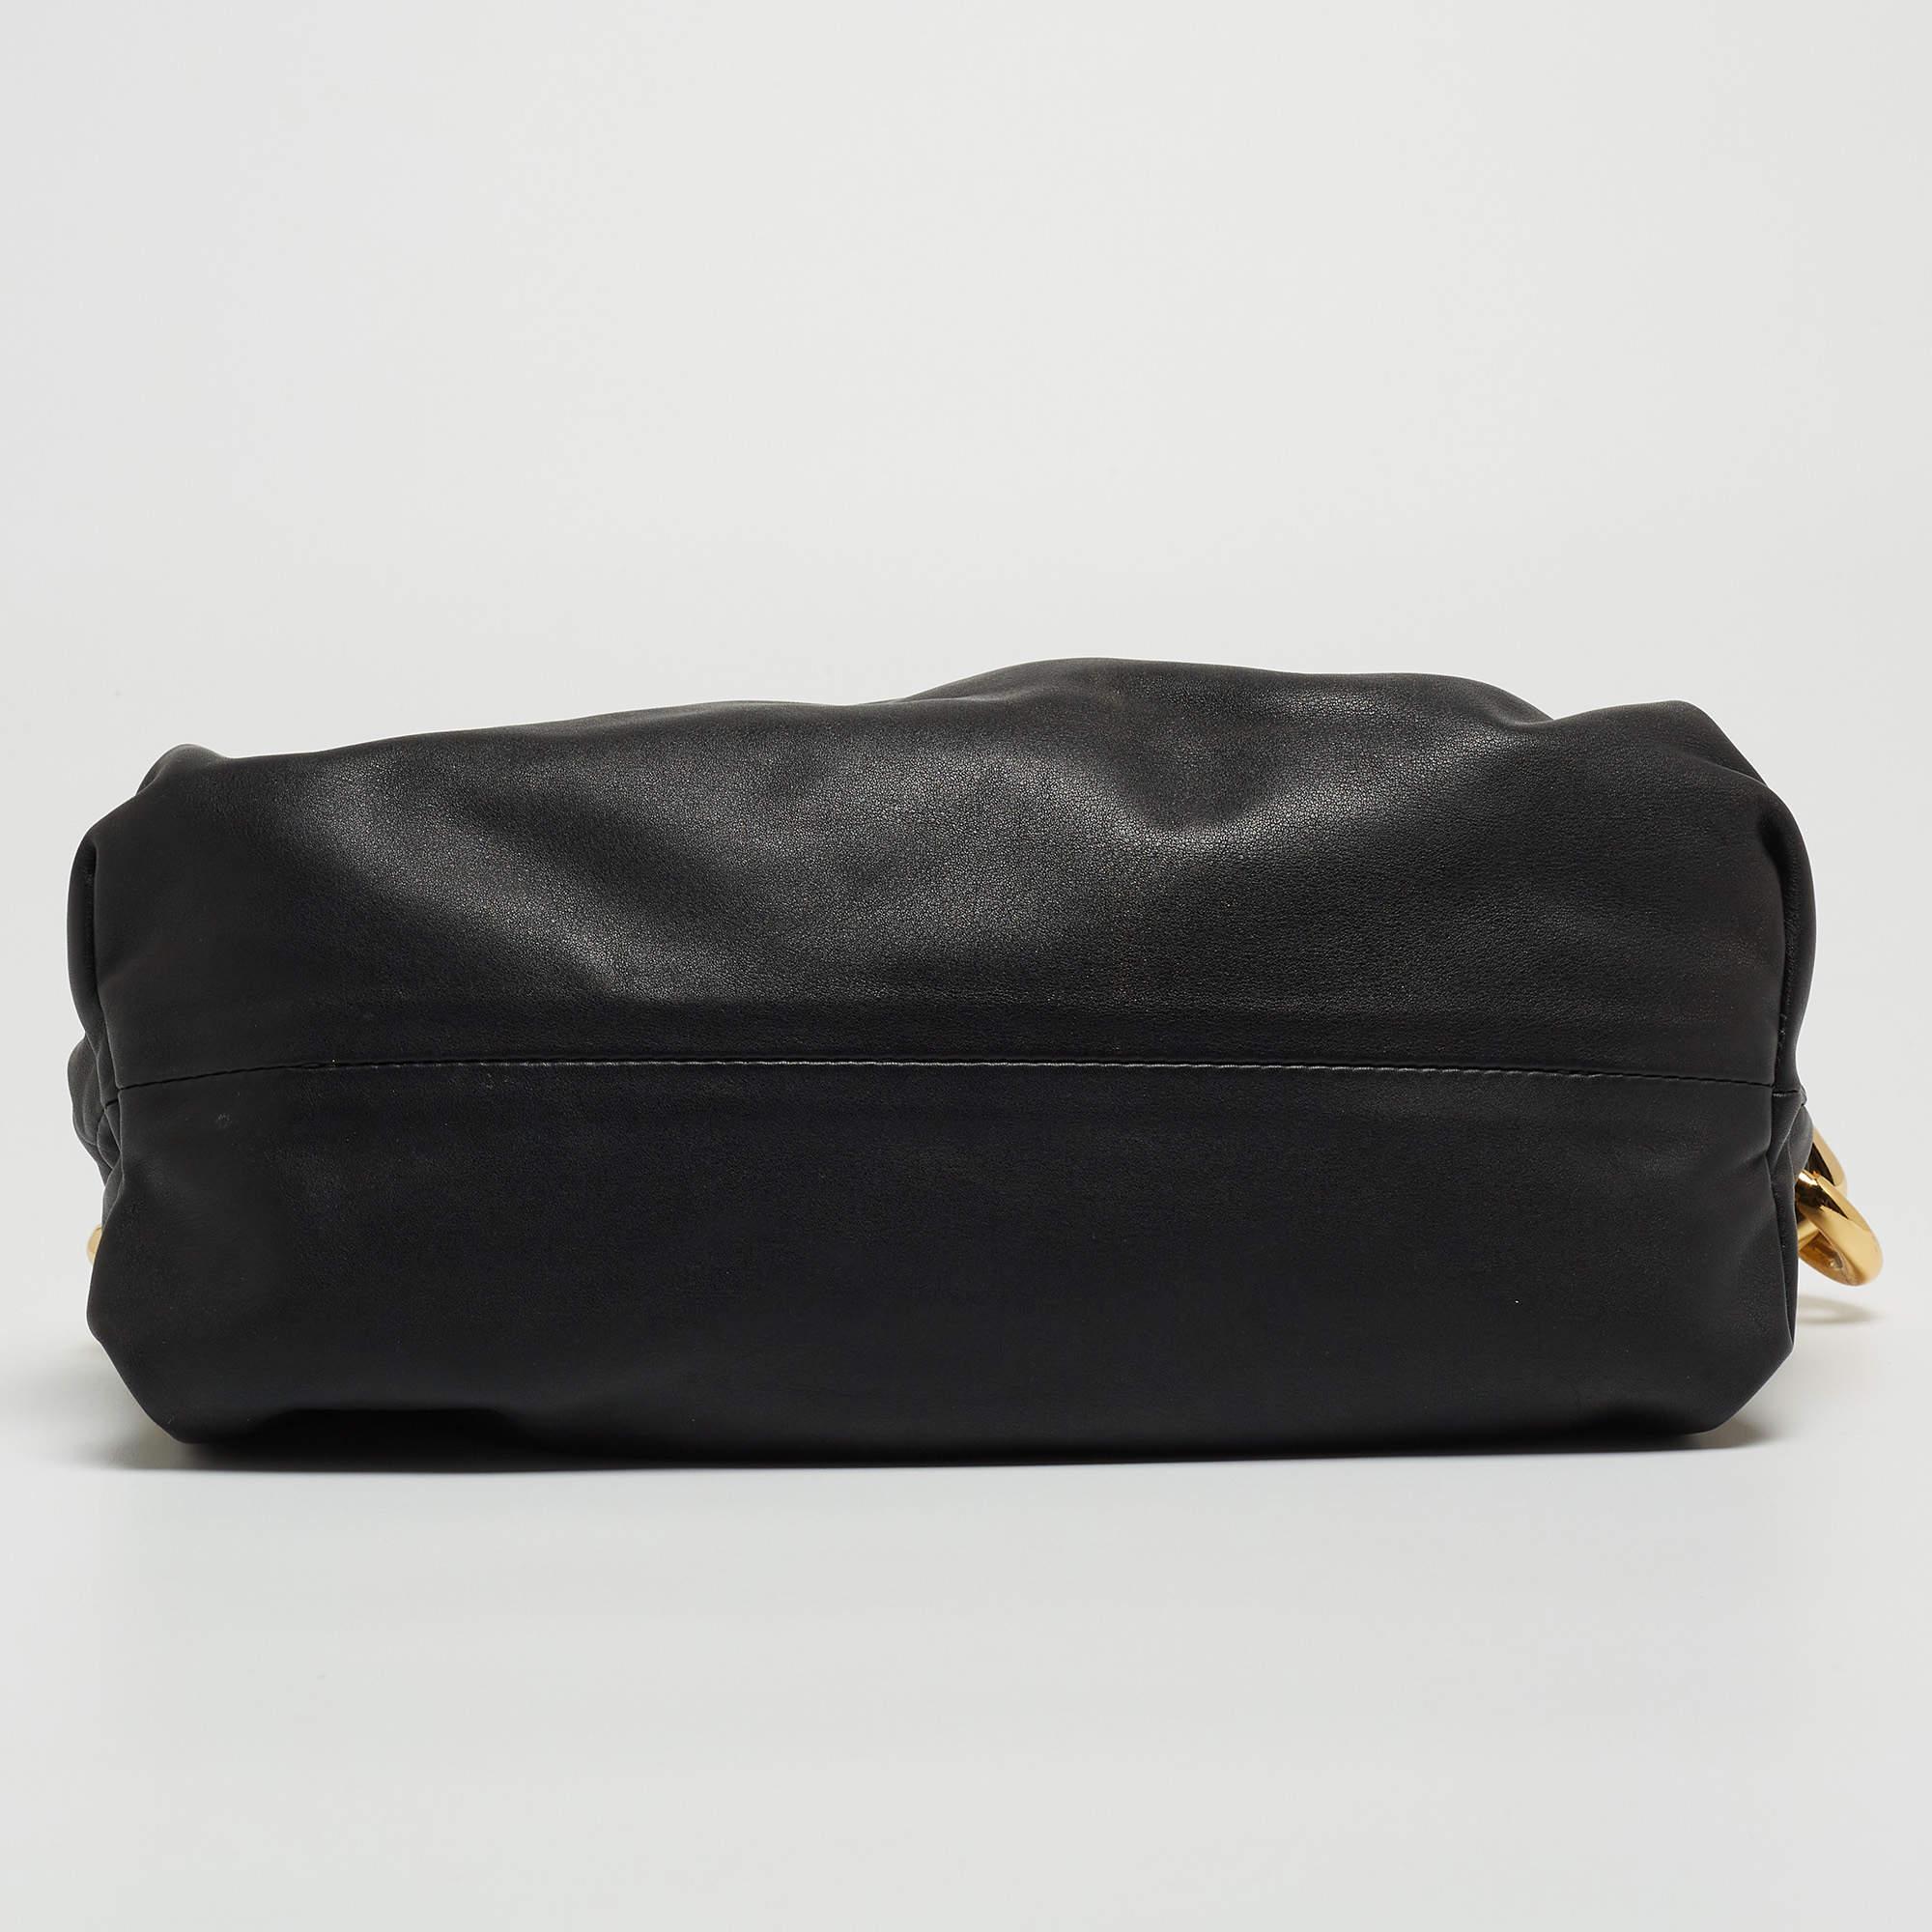 Bottega Veneta Black Leather Chain Pouch Shoulder Bag For Sale 4